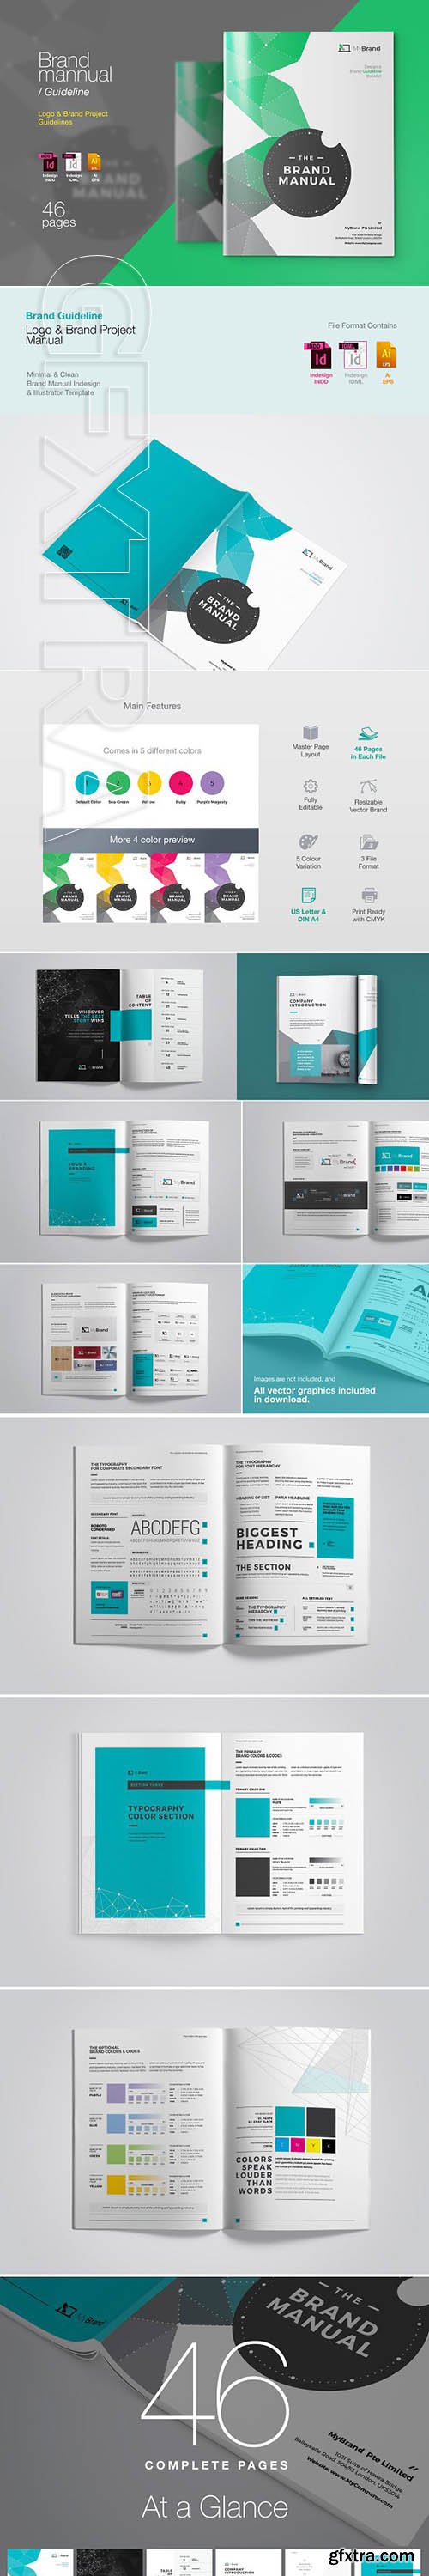 CreativeMarket - Brand Guideline Brochure 3370193